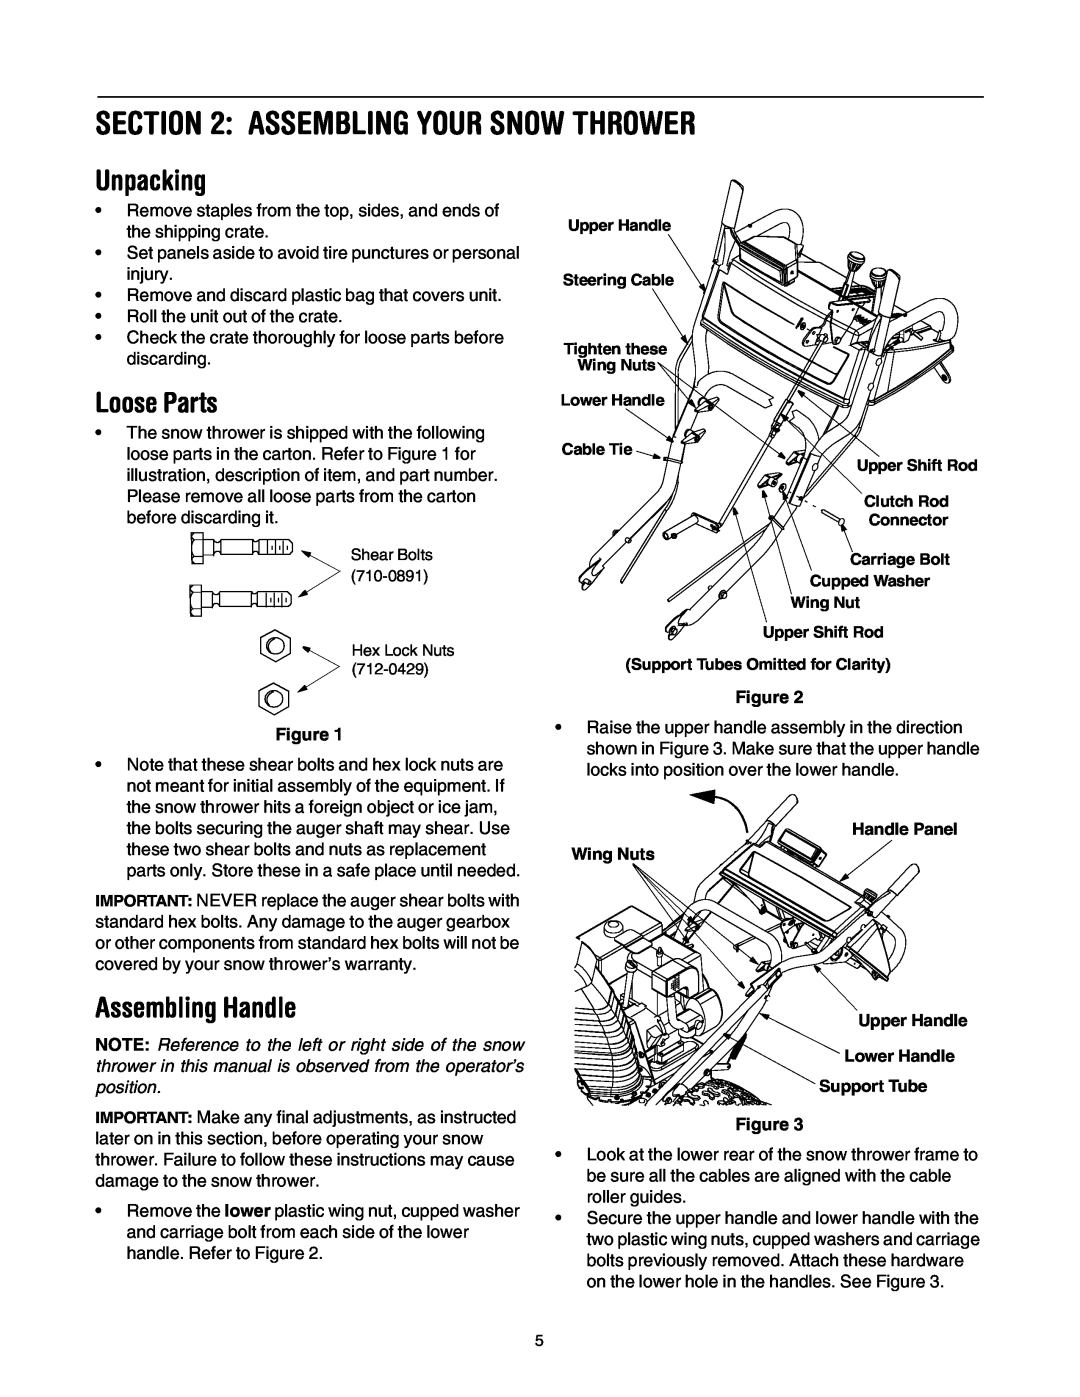 Cub Cadet 1345 SWE manual Assembling Your Snow Thrower, Unpacking, Loose Parts, Assembling Handle 